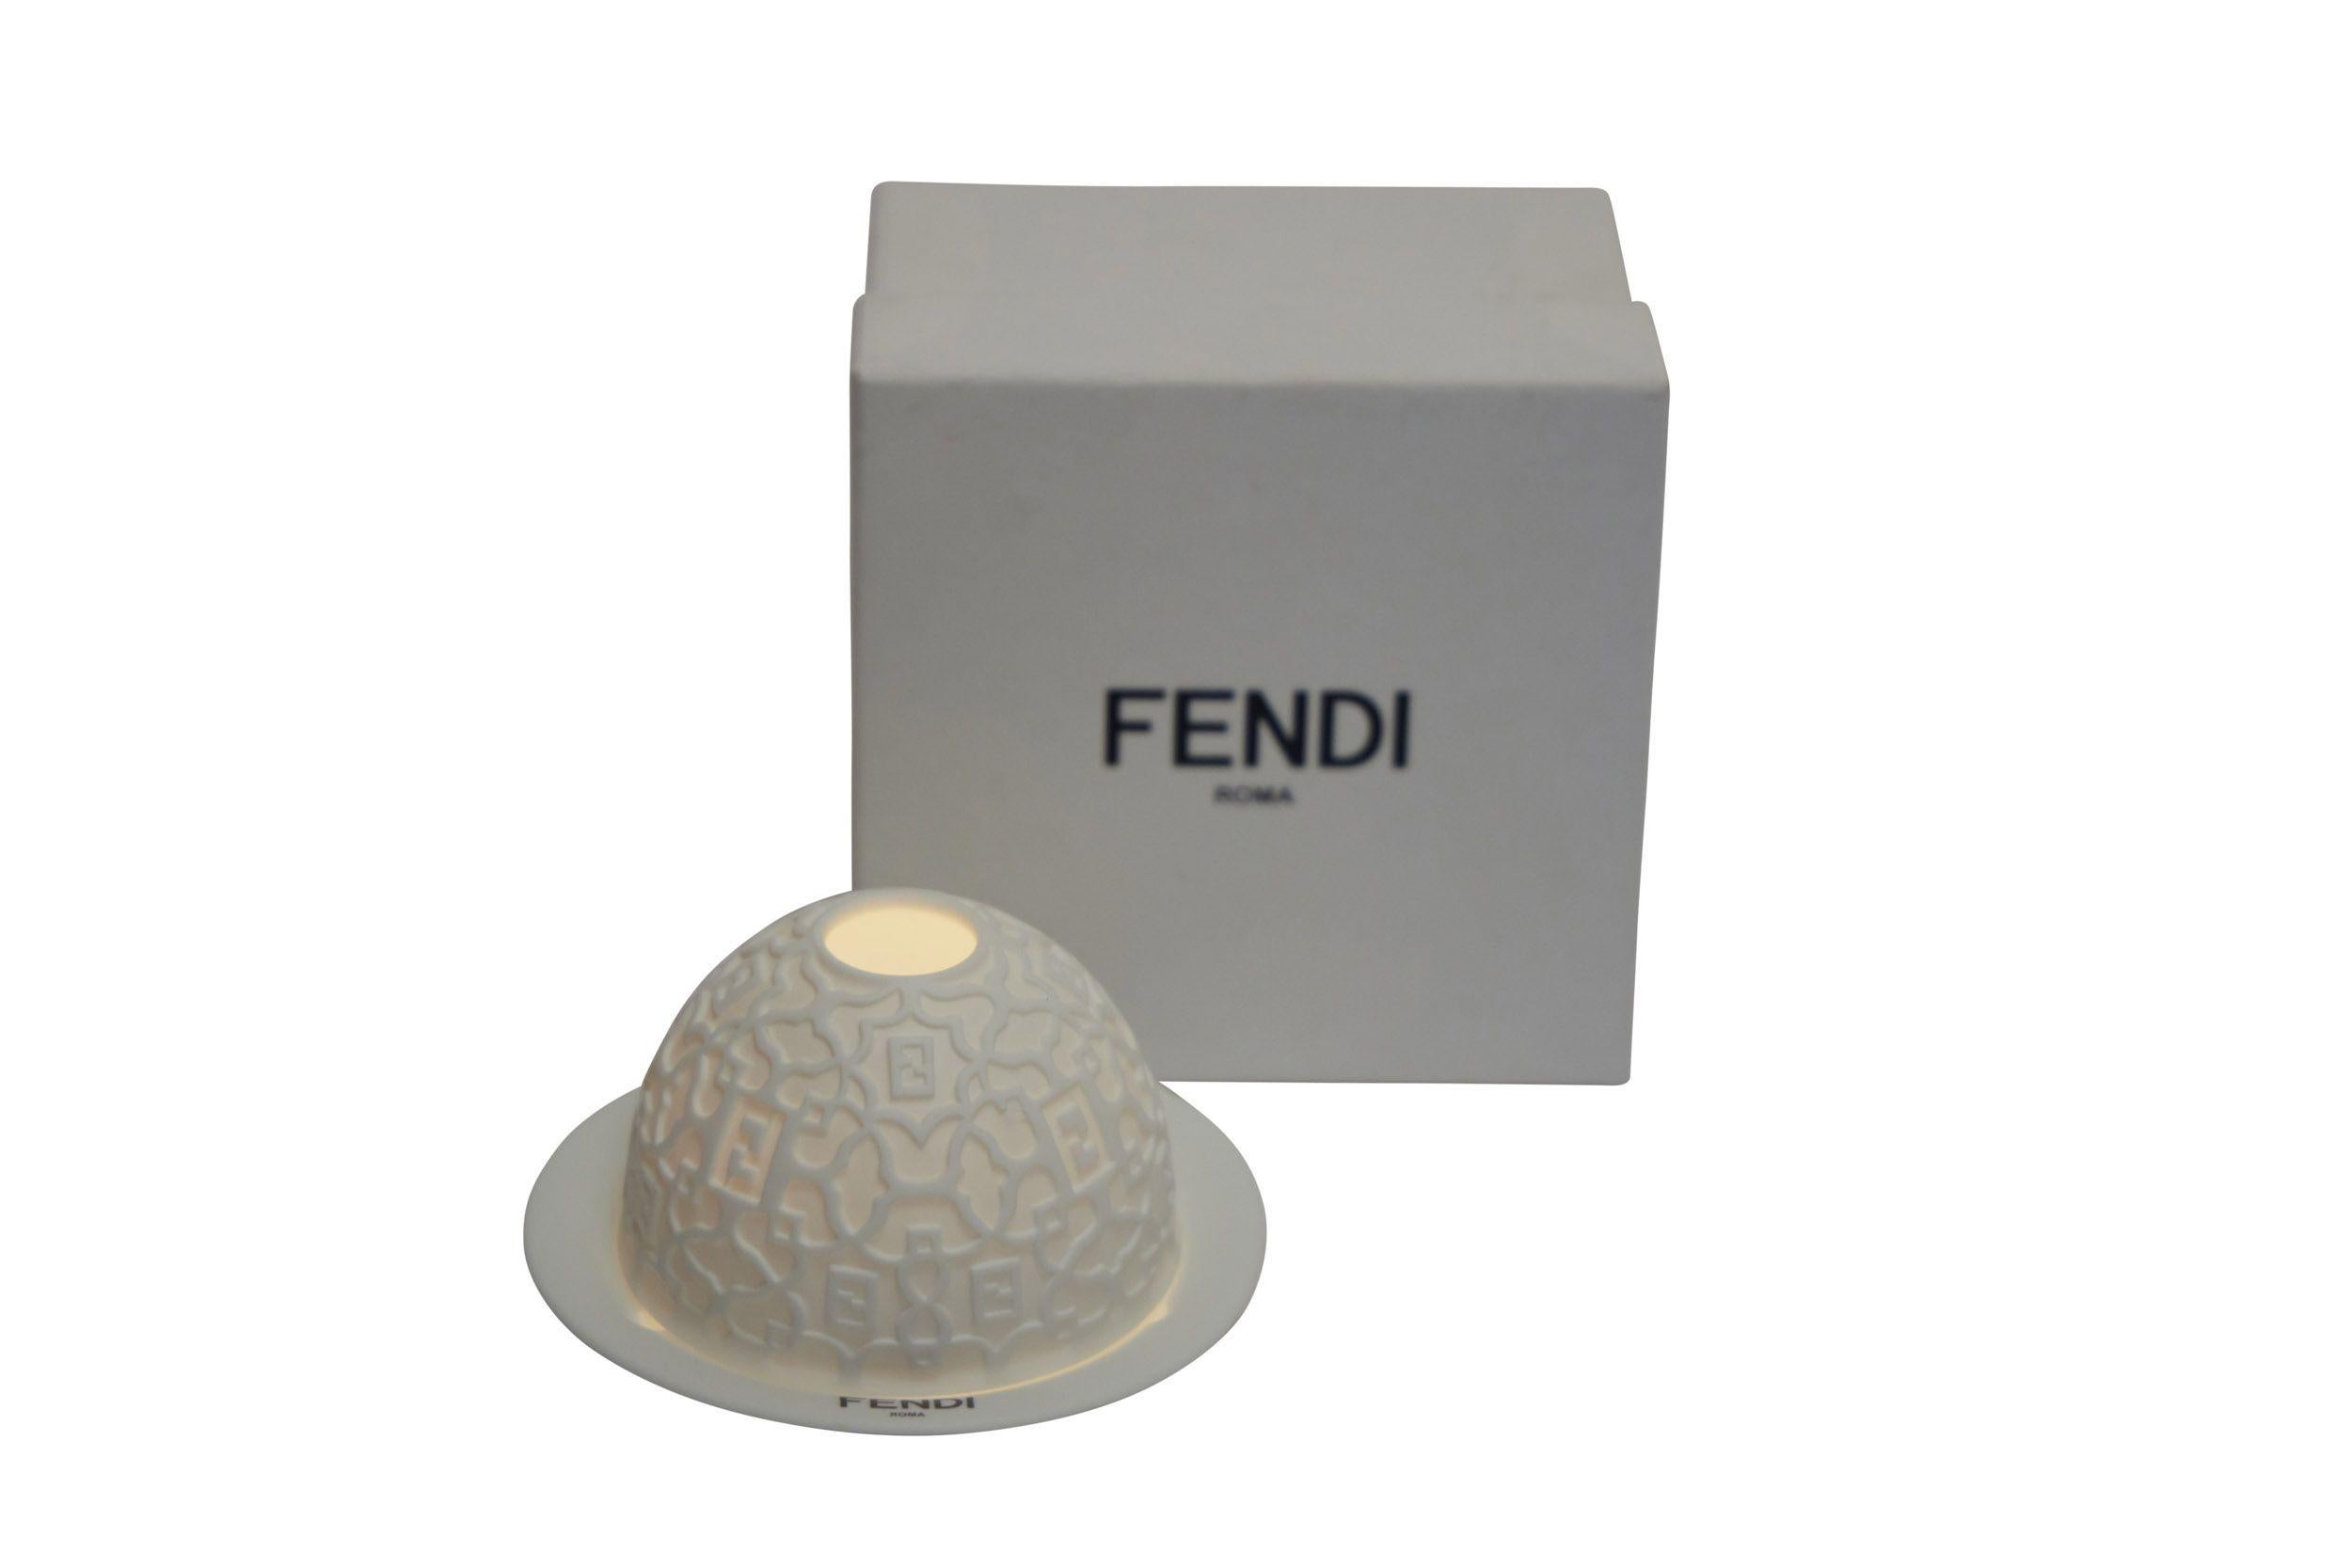 FENDI white etched ceramic candle holder, 2 pieces Diameter 5